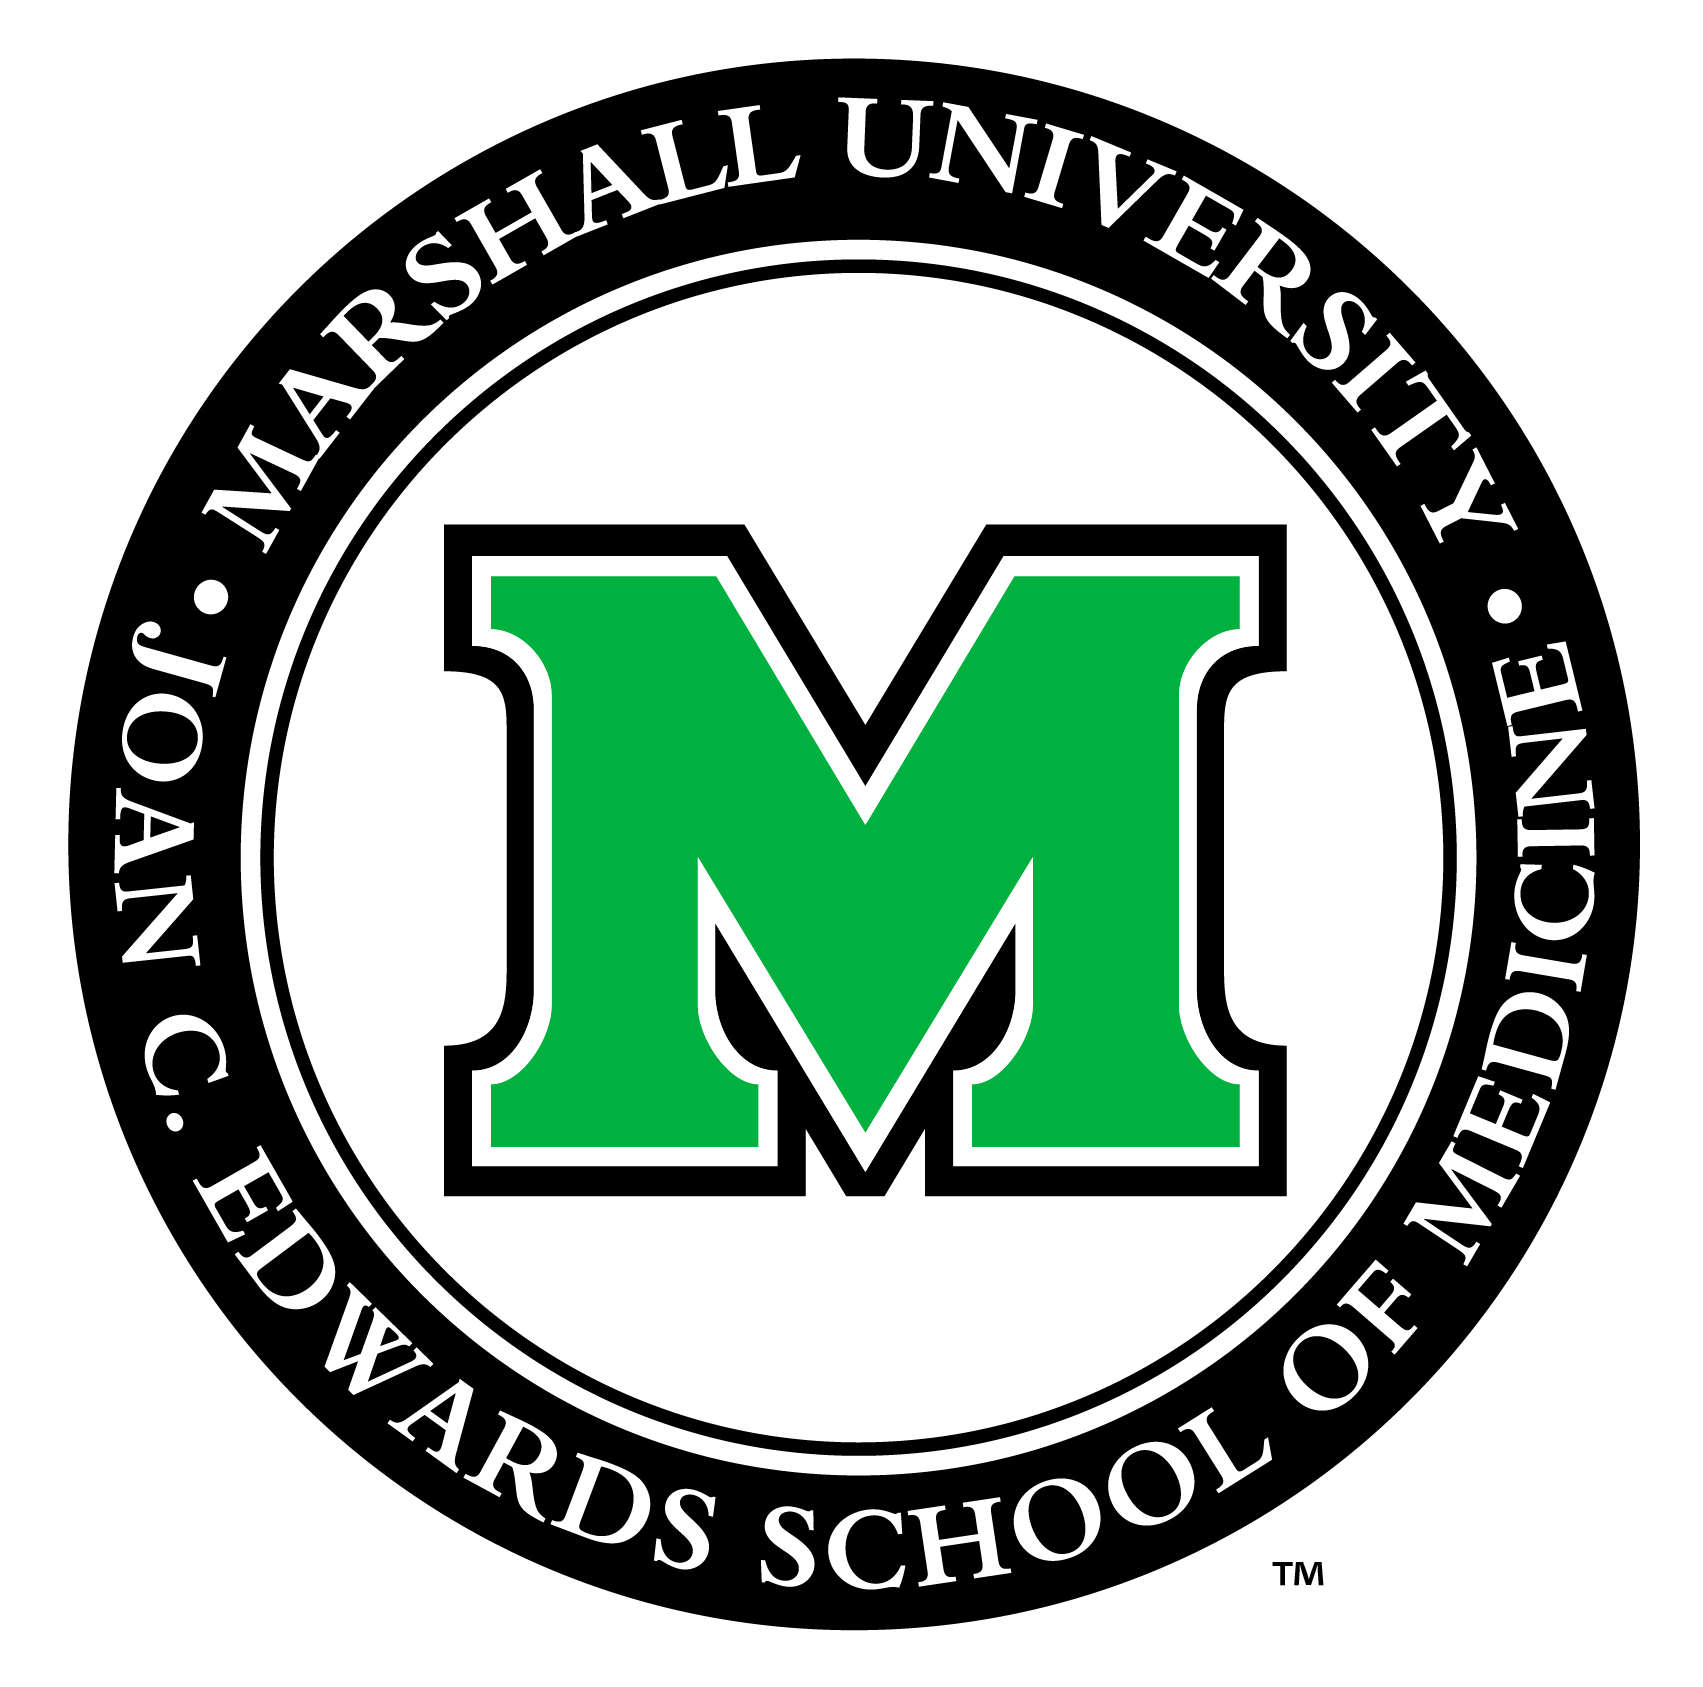 Marshall University School of Medicine